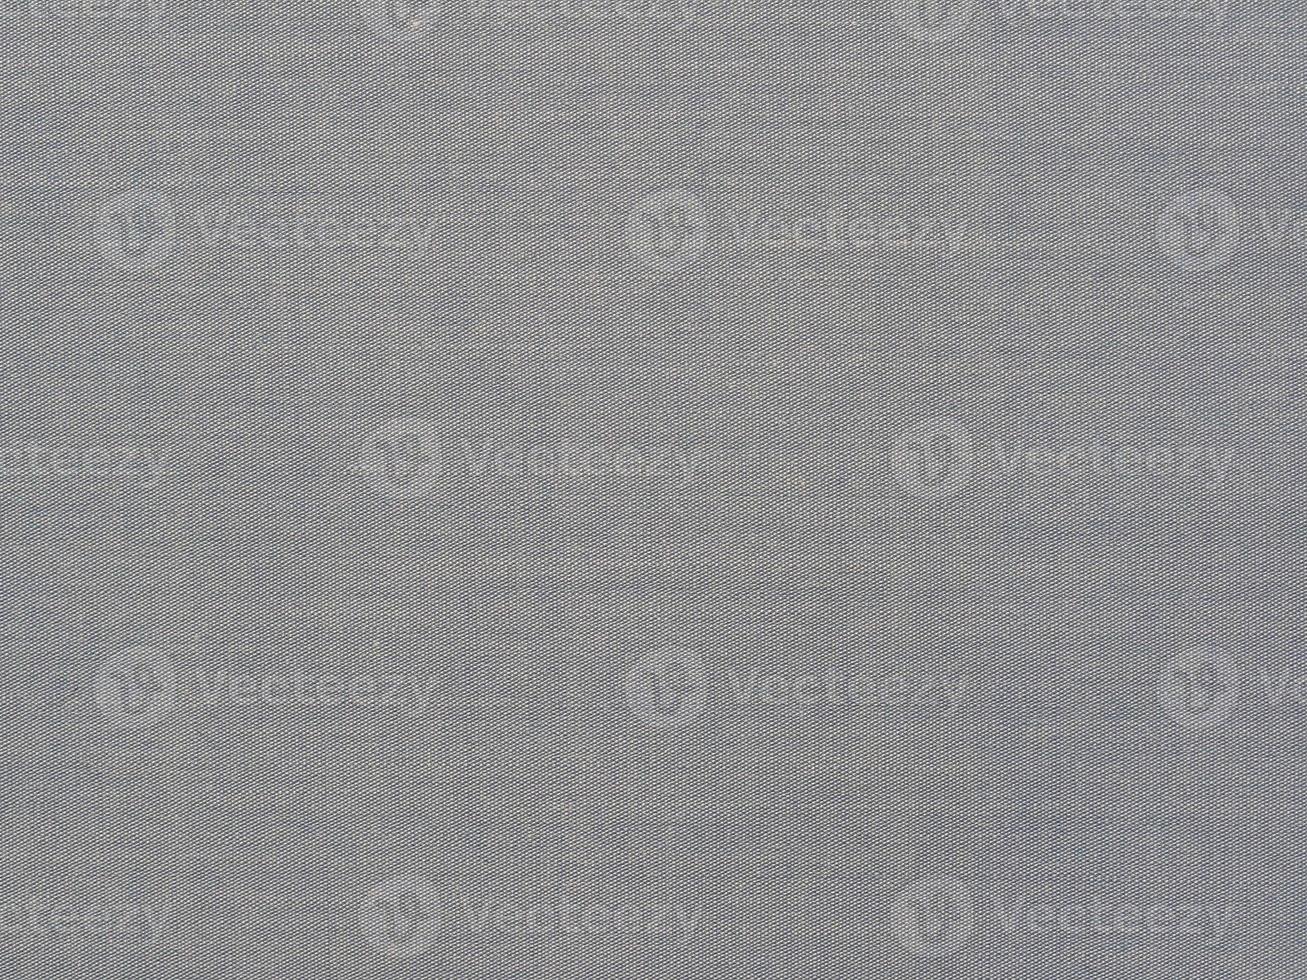 light grey fabric texture background photo